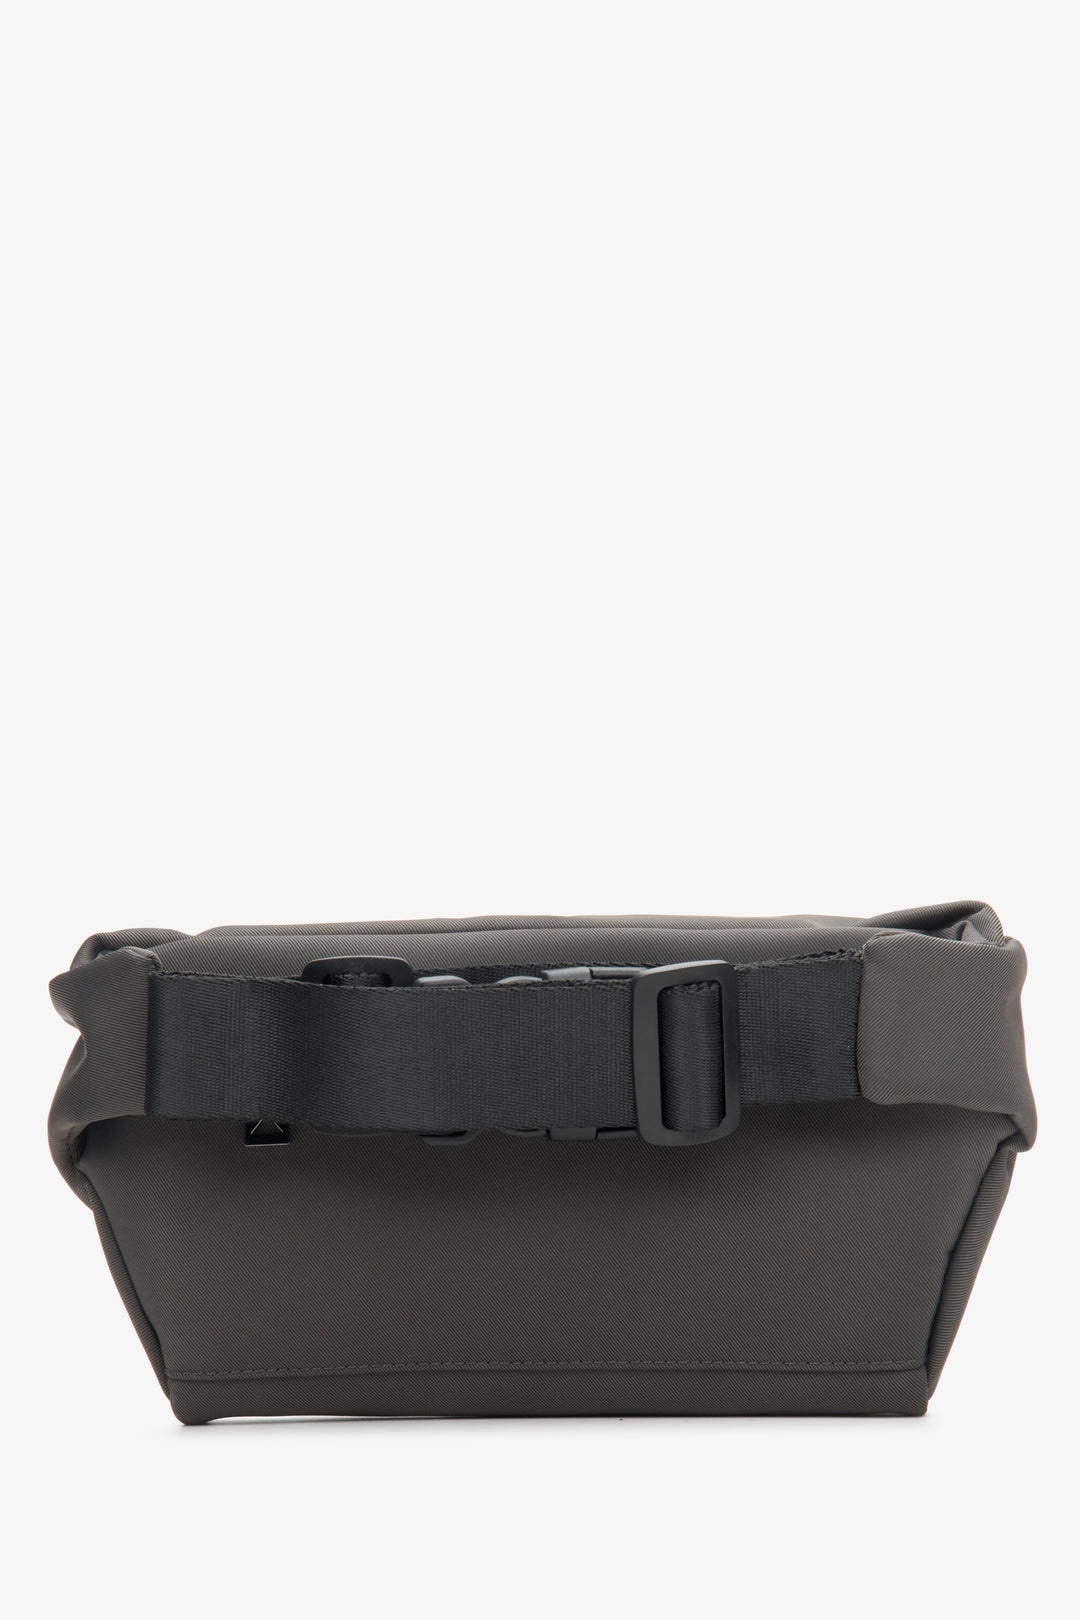 Men's dark grey waist bag with a comfortable strap by Estro - reverse side.